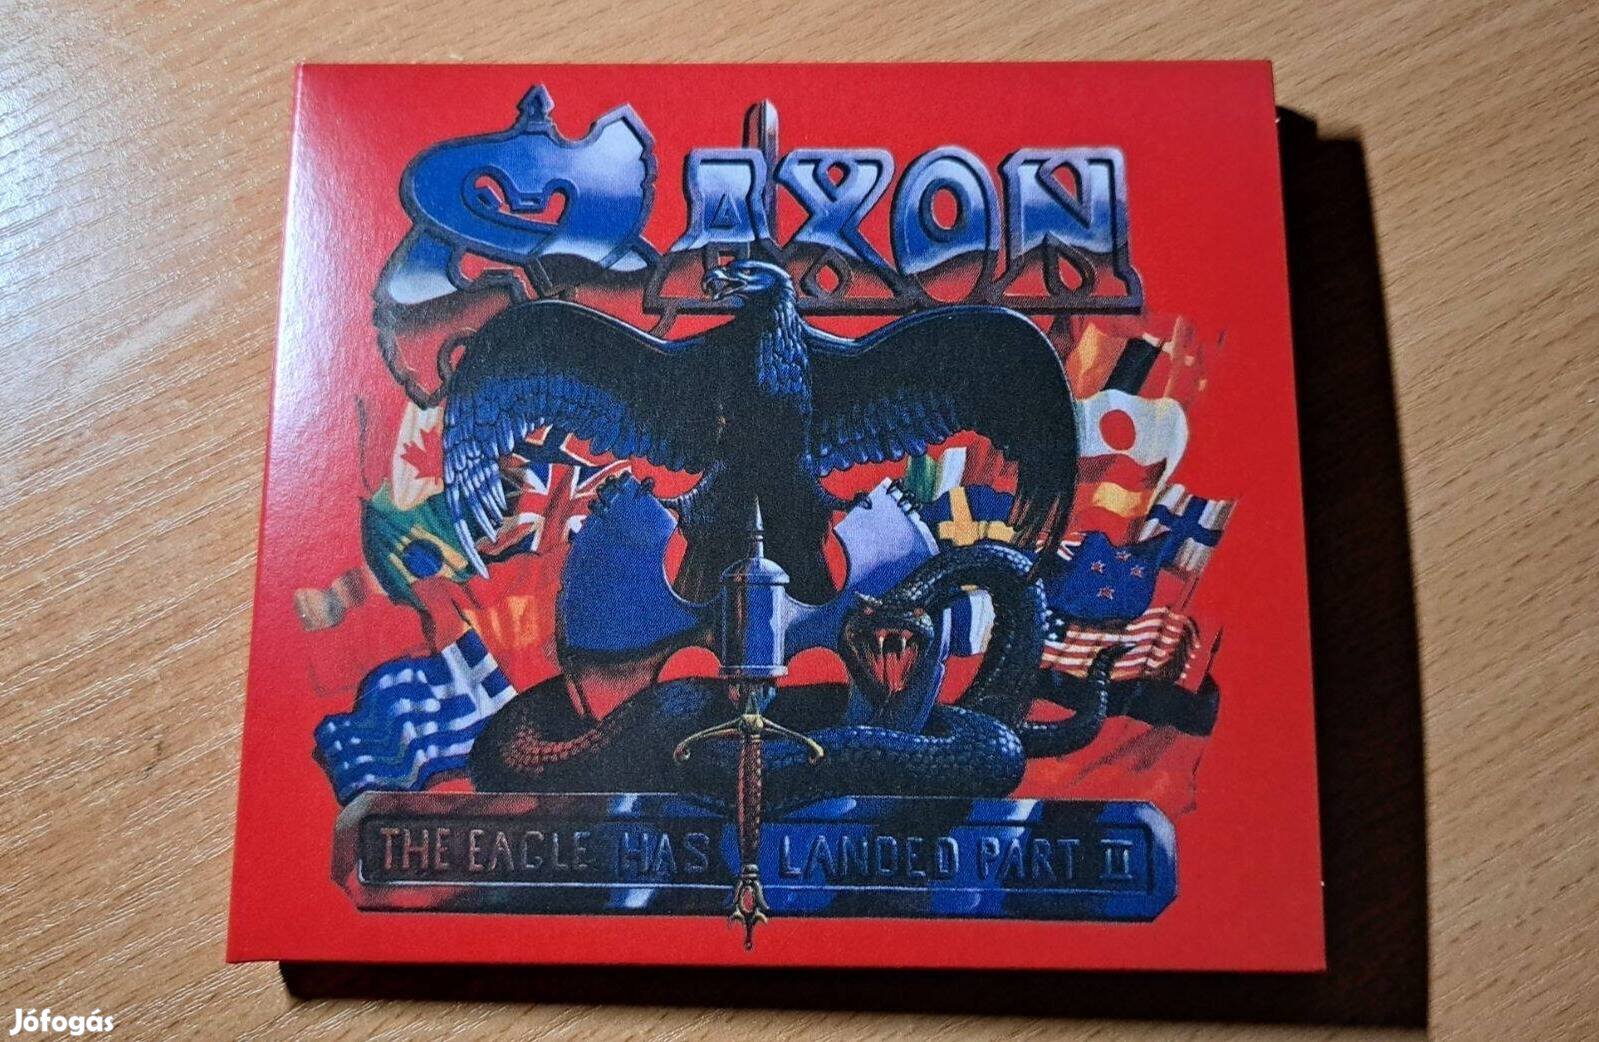 Saxon - The Eagle Has Landed - Part 2 - dupla CD